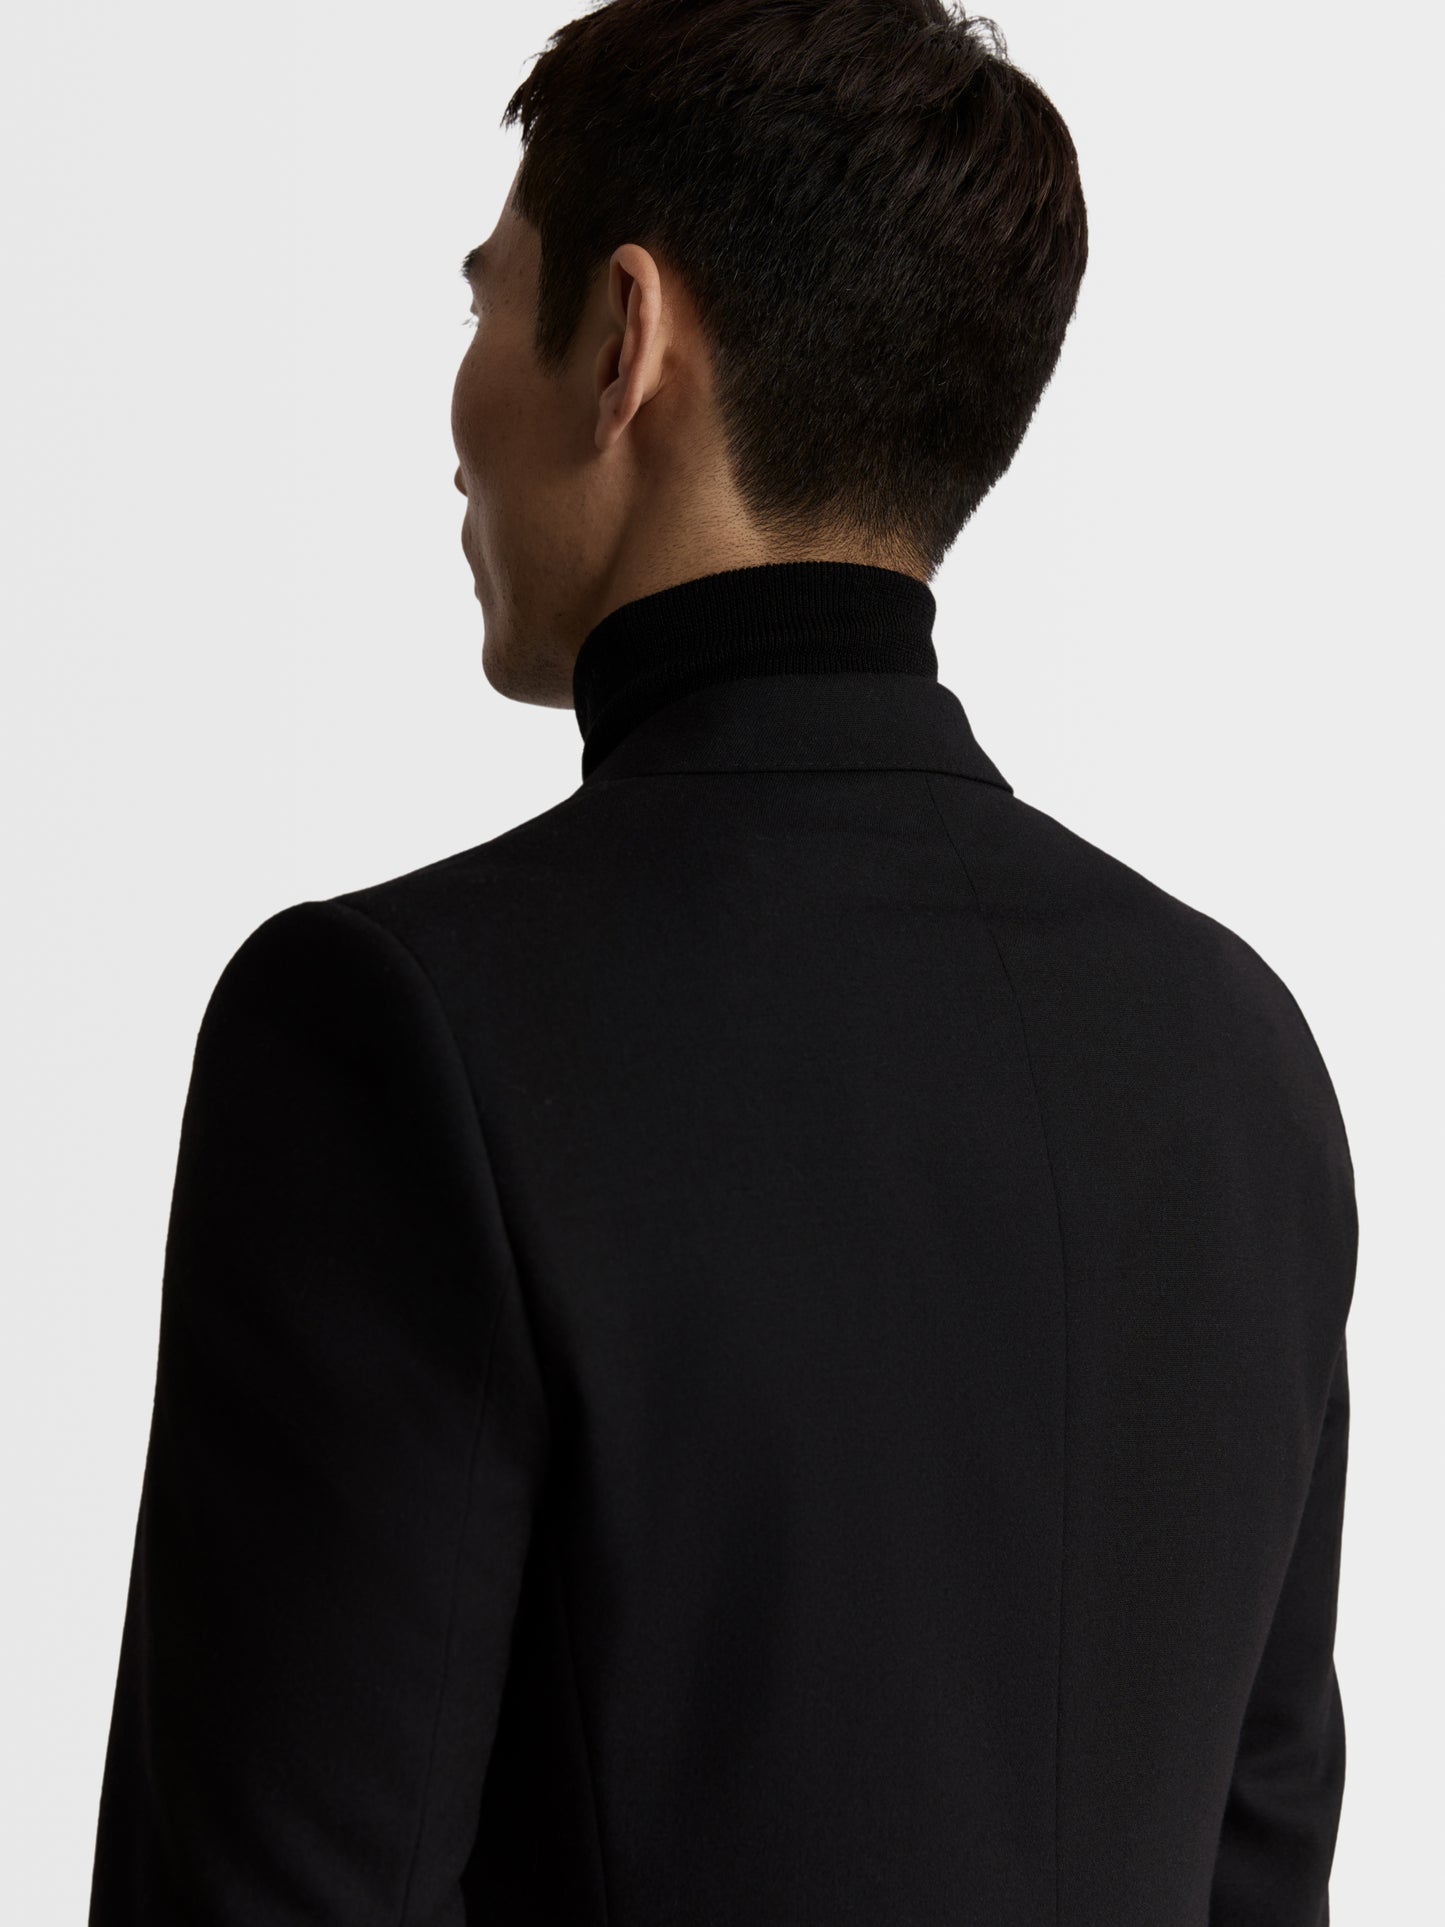 Image 3 of Idol Skinny Fit Plain Black Suit Jacket